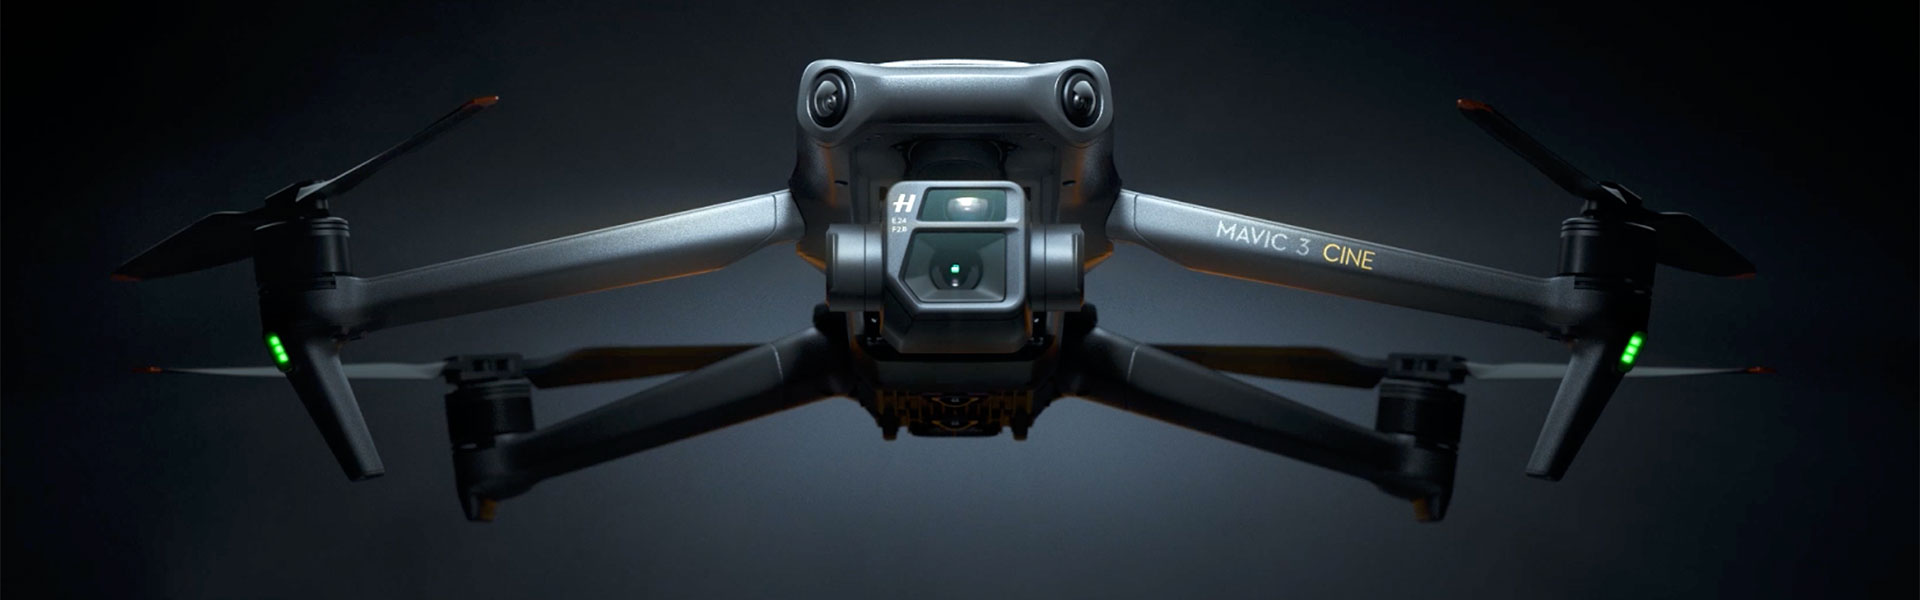 Drone Visions Mavic 3